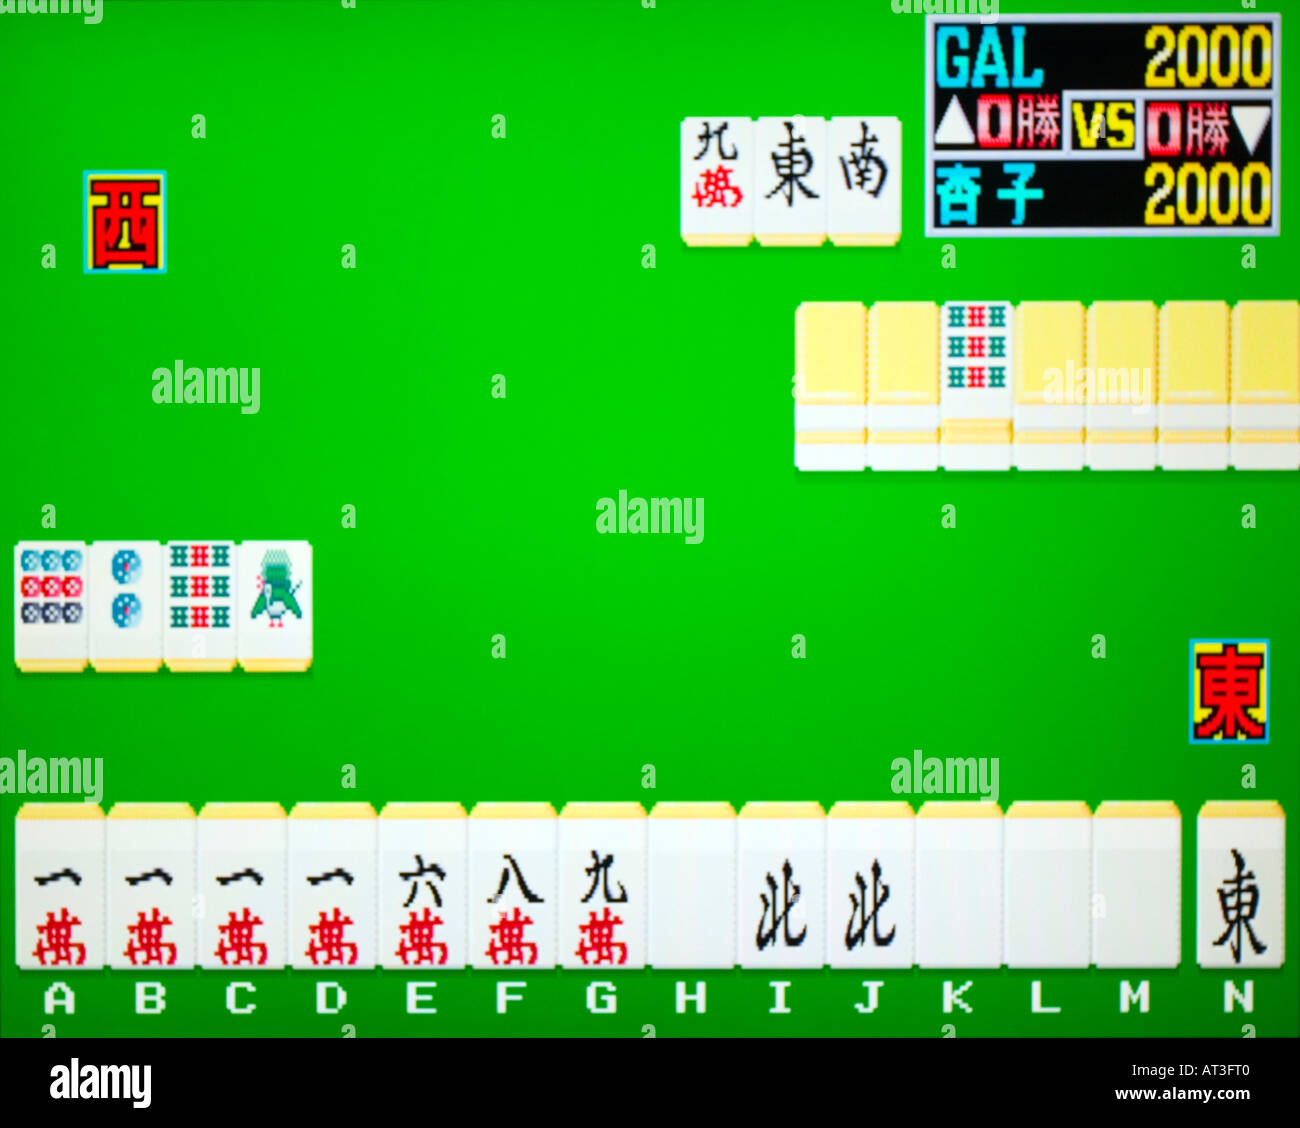 Mahjong Solitaire: Trem